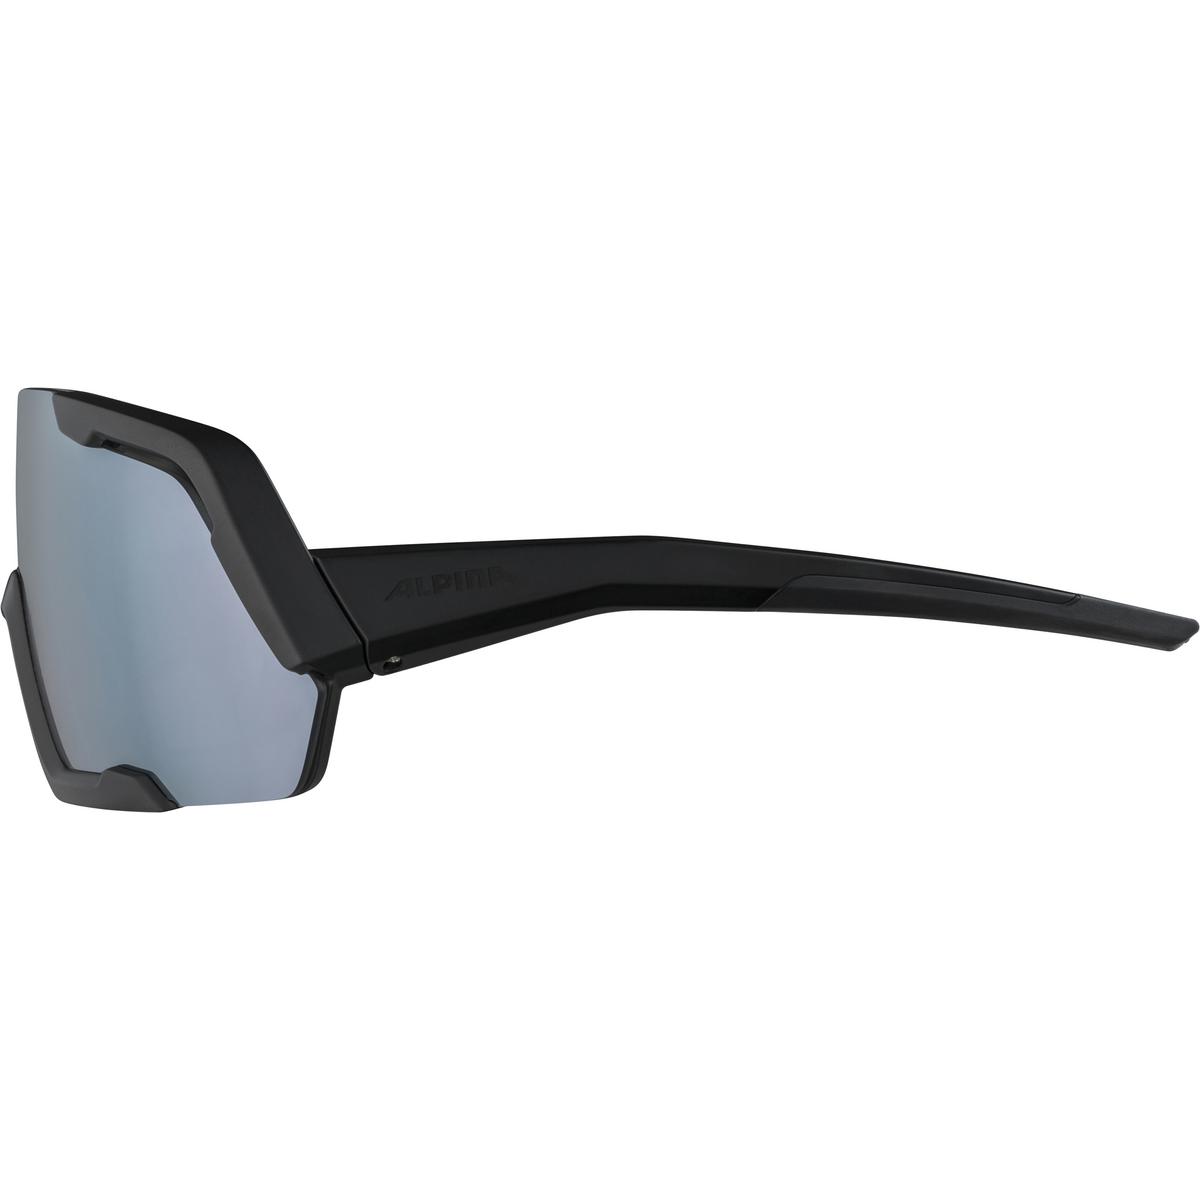 Alpina Sportbrille ROCKET A8678.3.31 all black matt